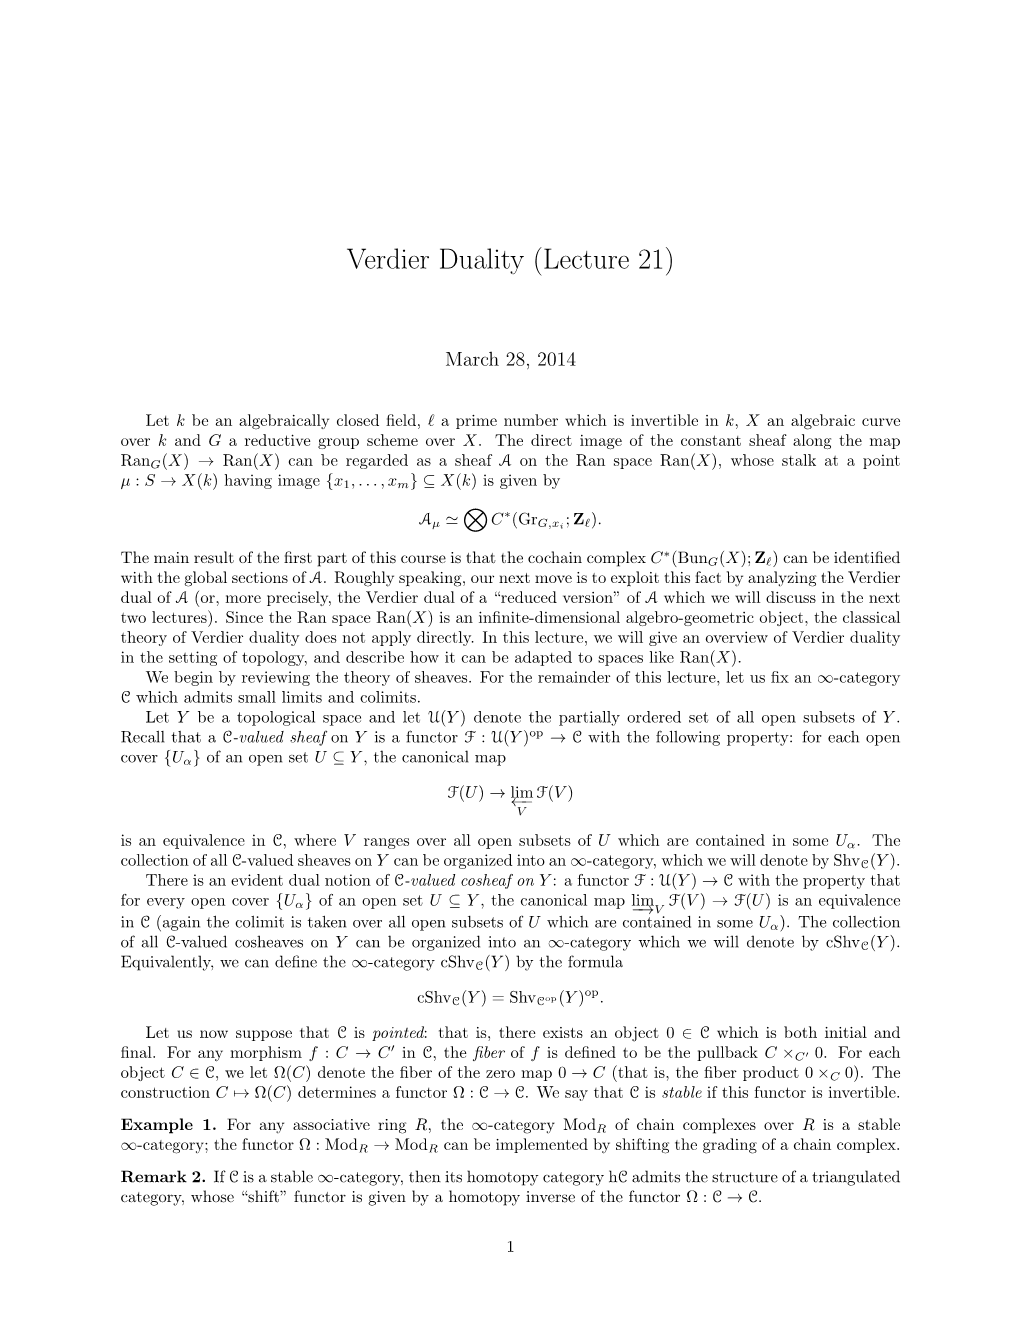 Lecture 21: Verdier Duality